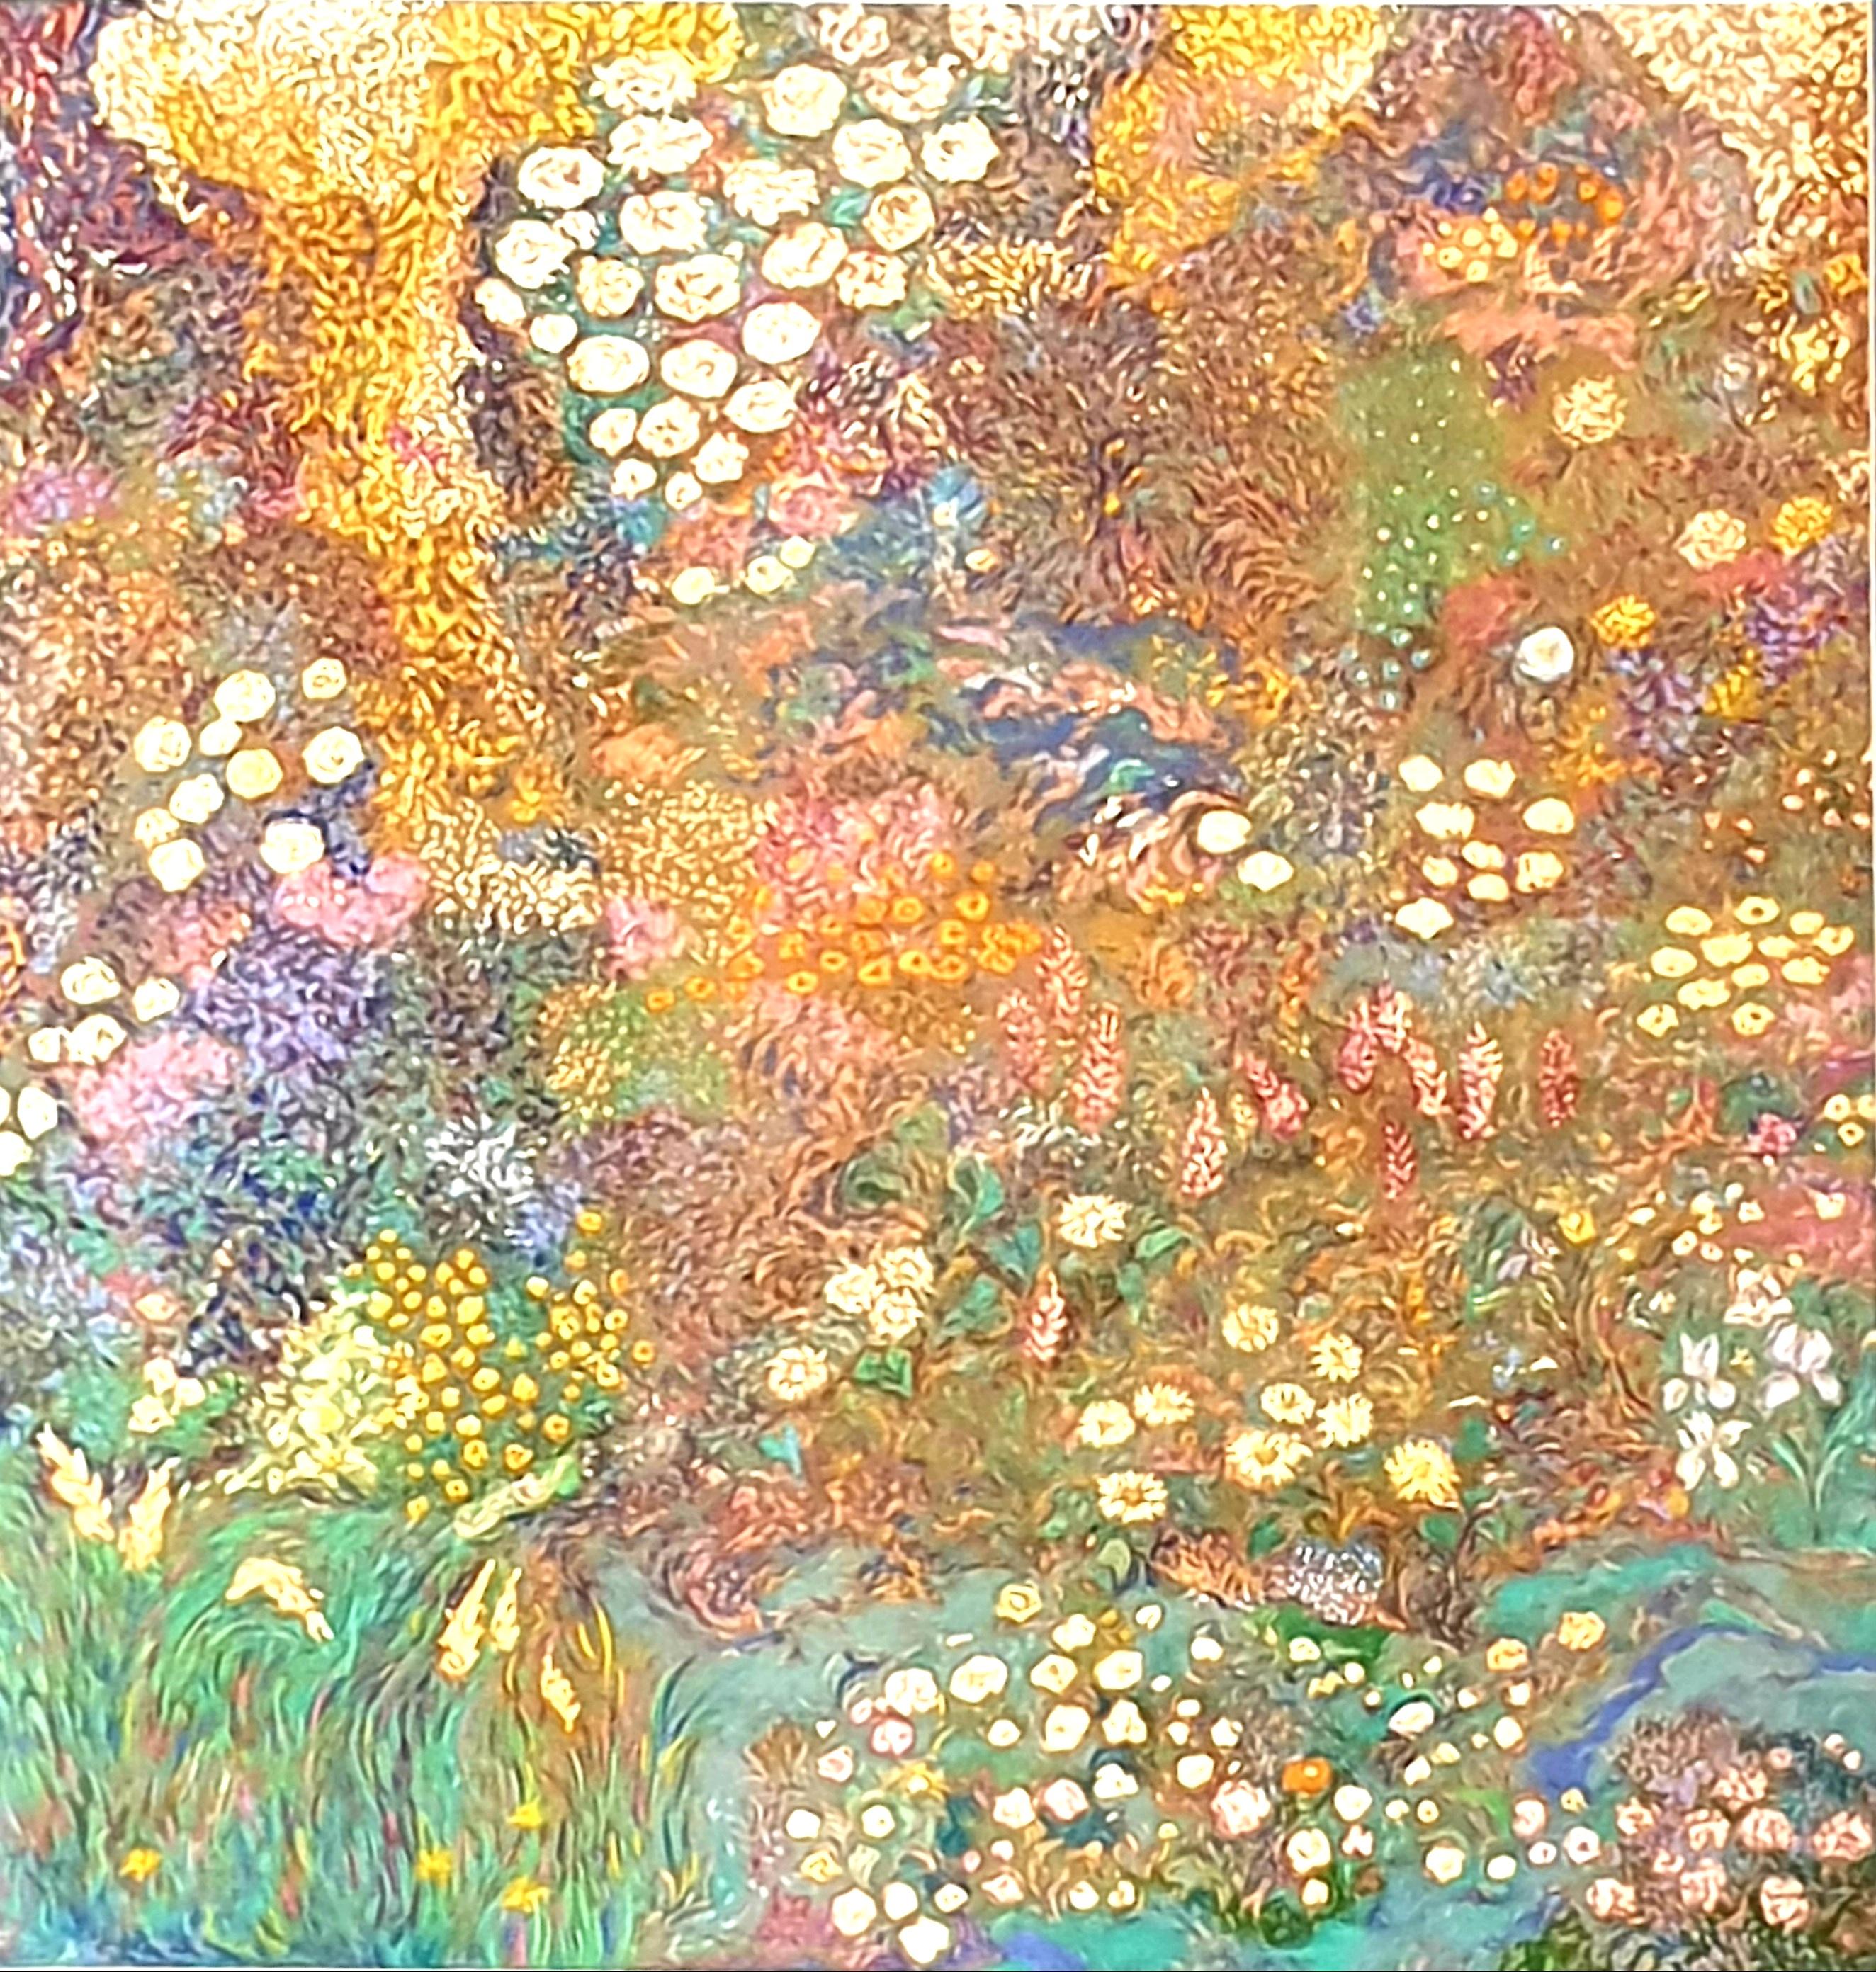 Francis Besson Landscape Painting - 'Garden in Full Bloom', Impressionist Pointillist Pastel.